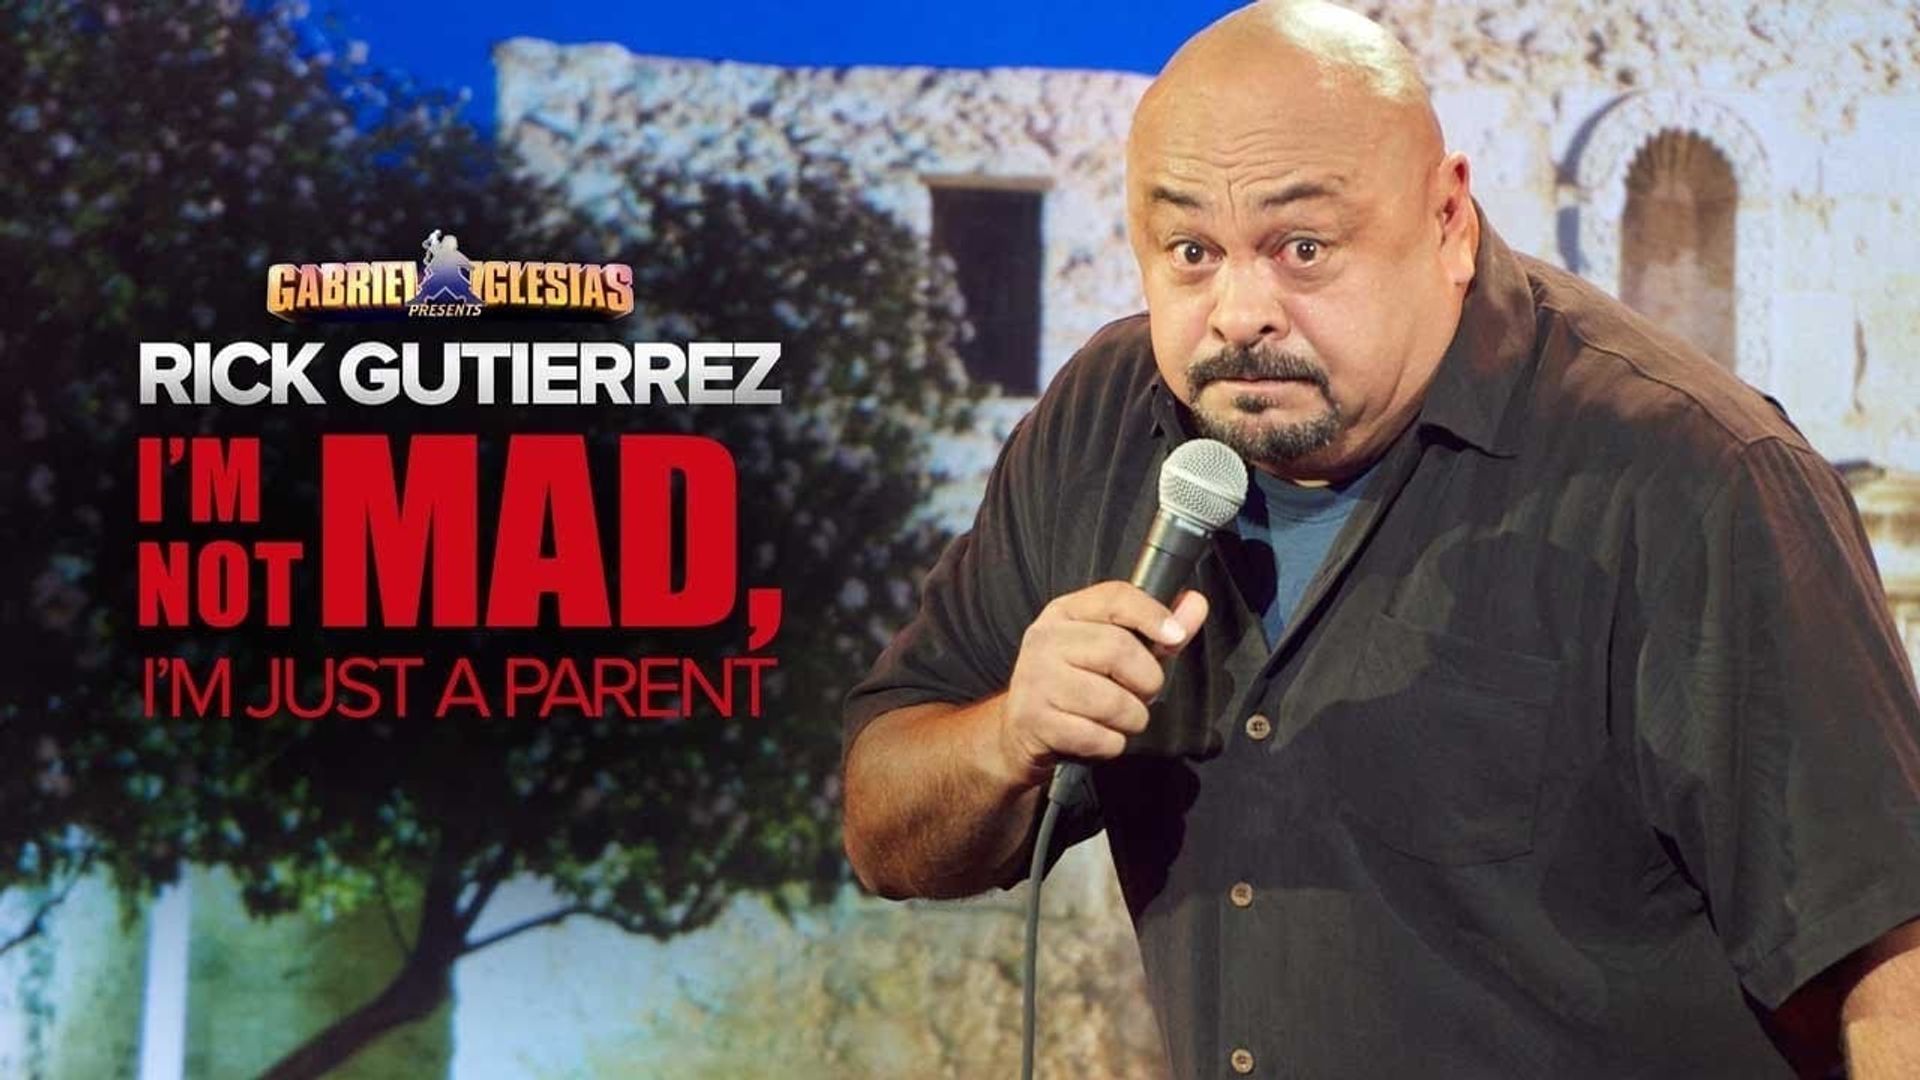 Gabriel Iglesias Presents Rick Gutierrez: I'm Not Mad. I'm Just a Parent. background